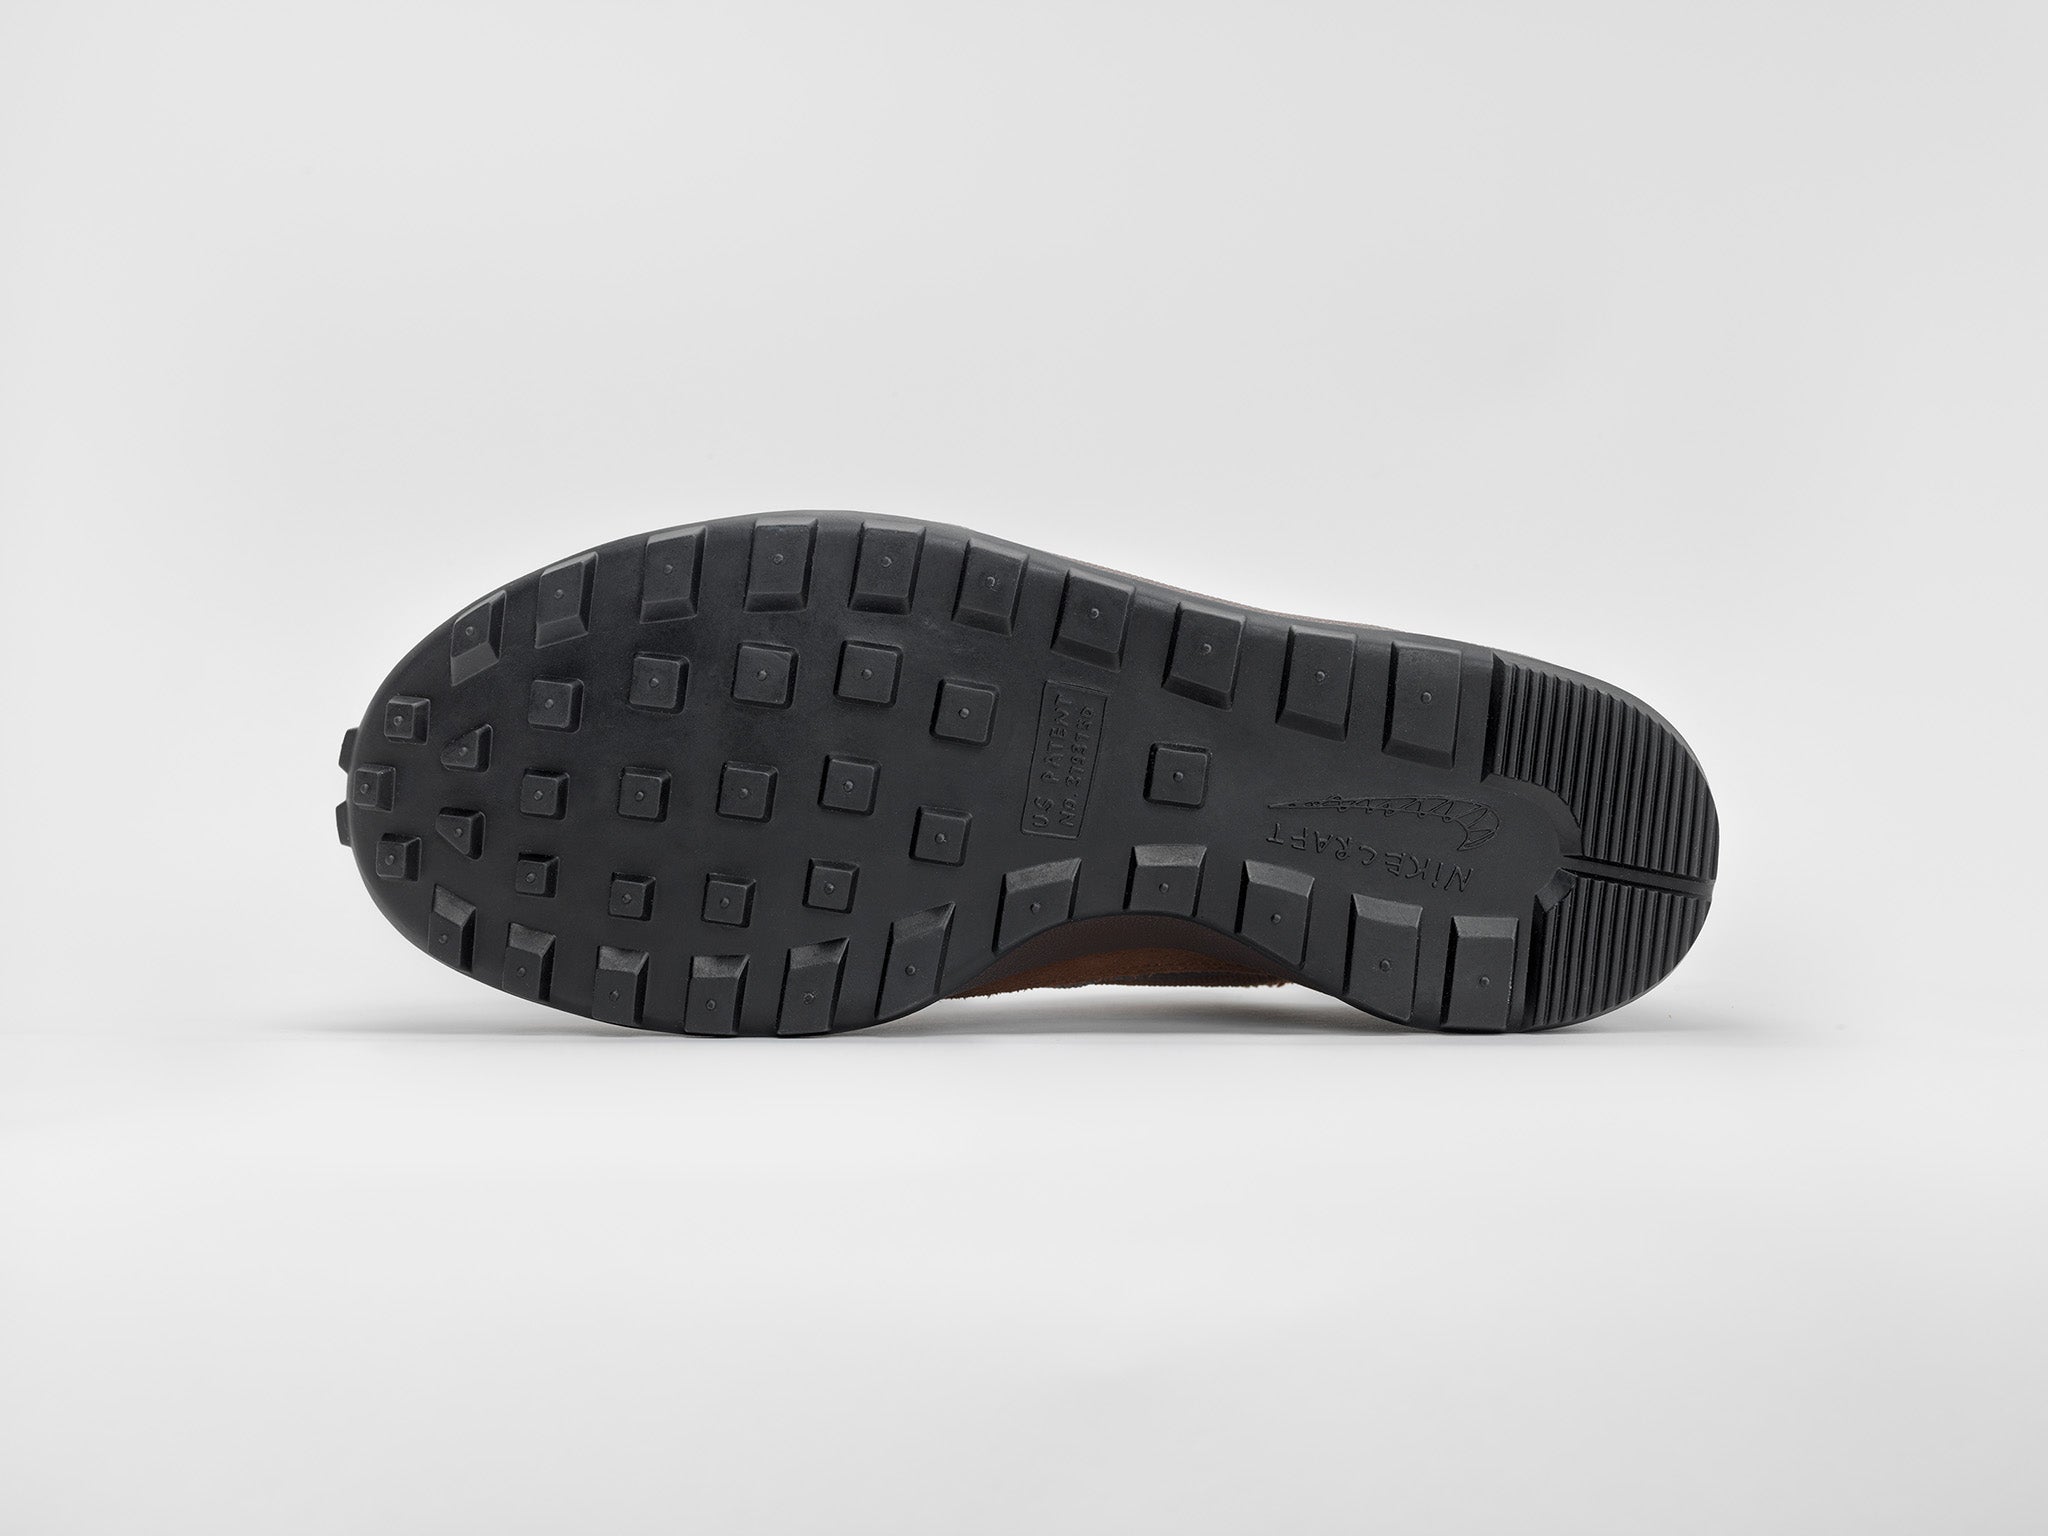 CITY BOY - Tom Sachs x NikeCraft General Purpose Shoe Brown .  ดูเนื้อหาแบบครบถ้วนที่    . #CITYBOY